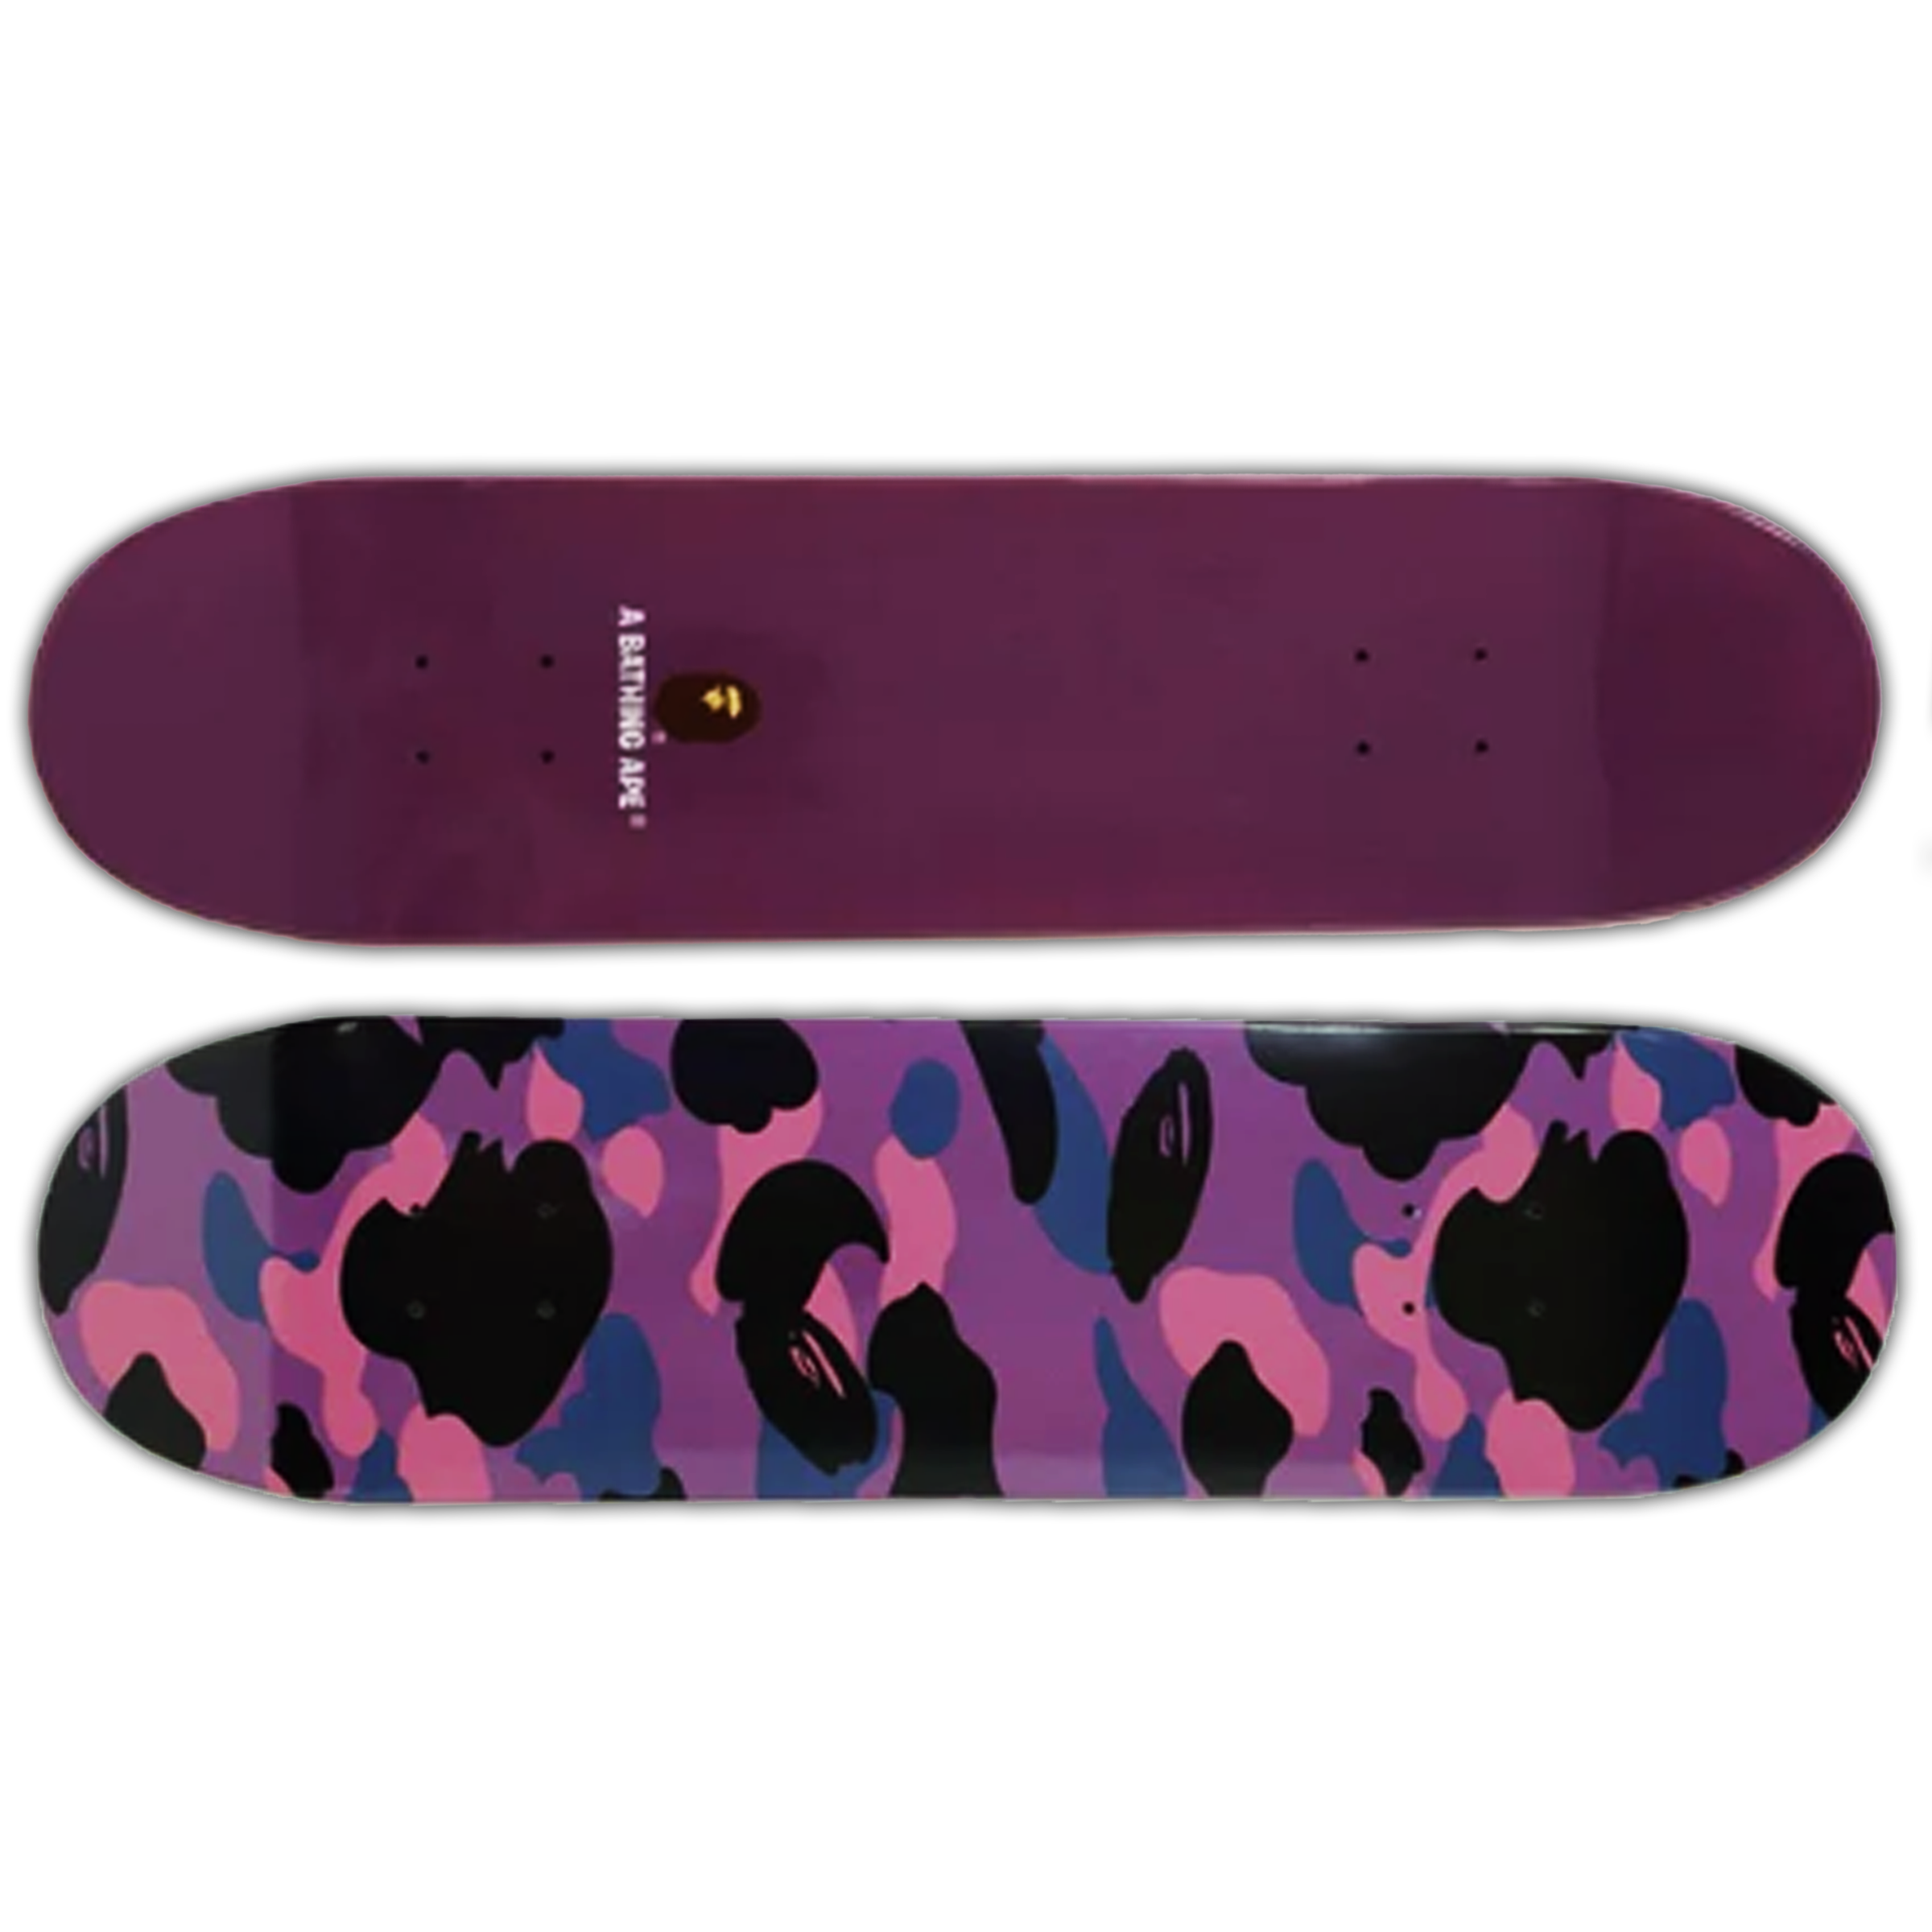 A Bathing Ape "Color Camo" Skateboard